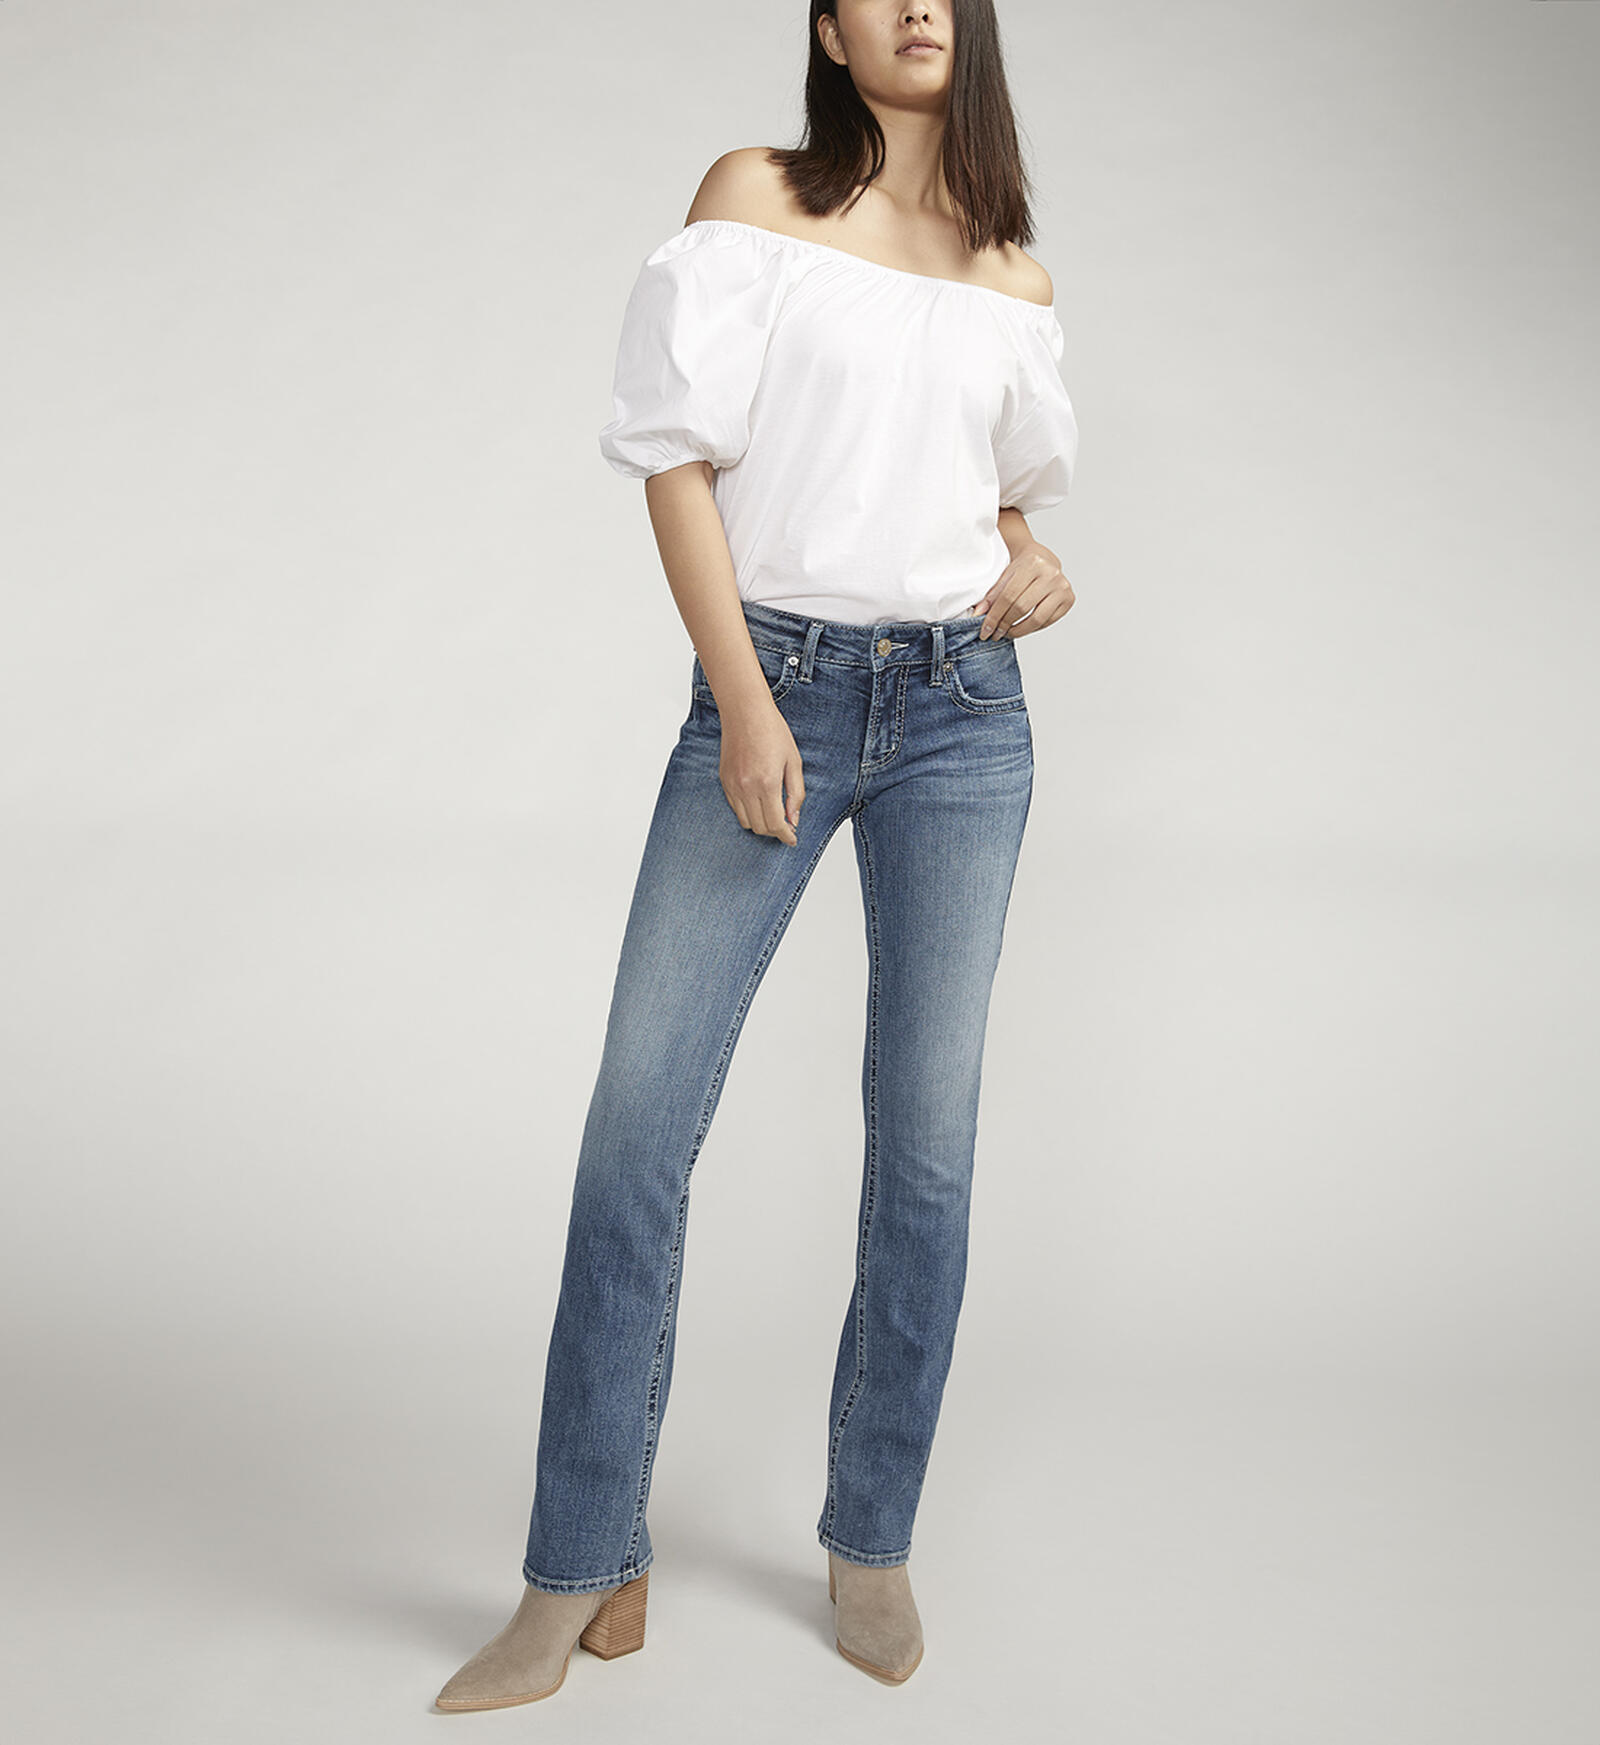 Buy Britt Low Rise Slim Bootcut Jeans Plus Size for USD 49.00